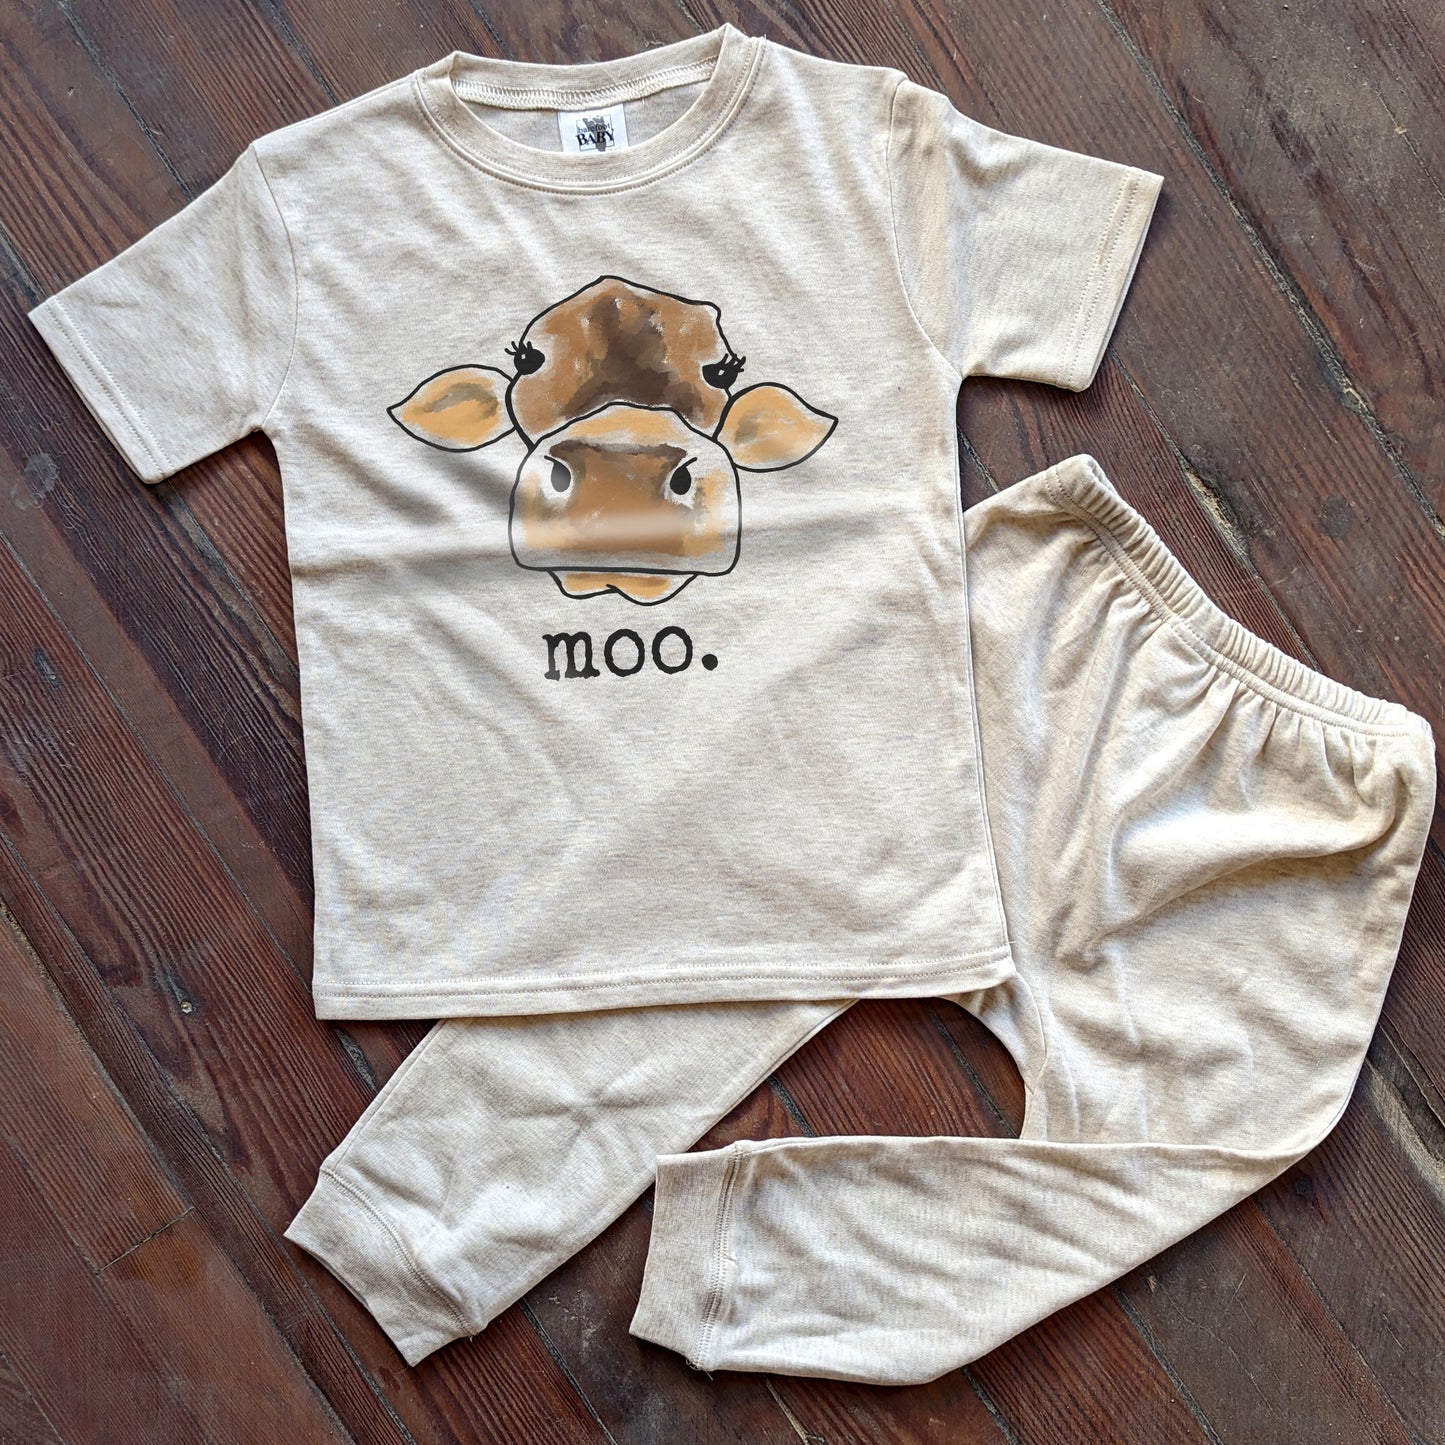 "Moo" Cow Farm Adventure Sleep 'n Play Set | Size 2T through 5T | Includes Shirt & Joggers